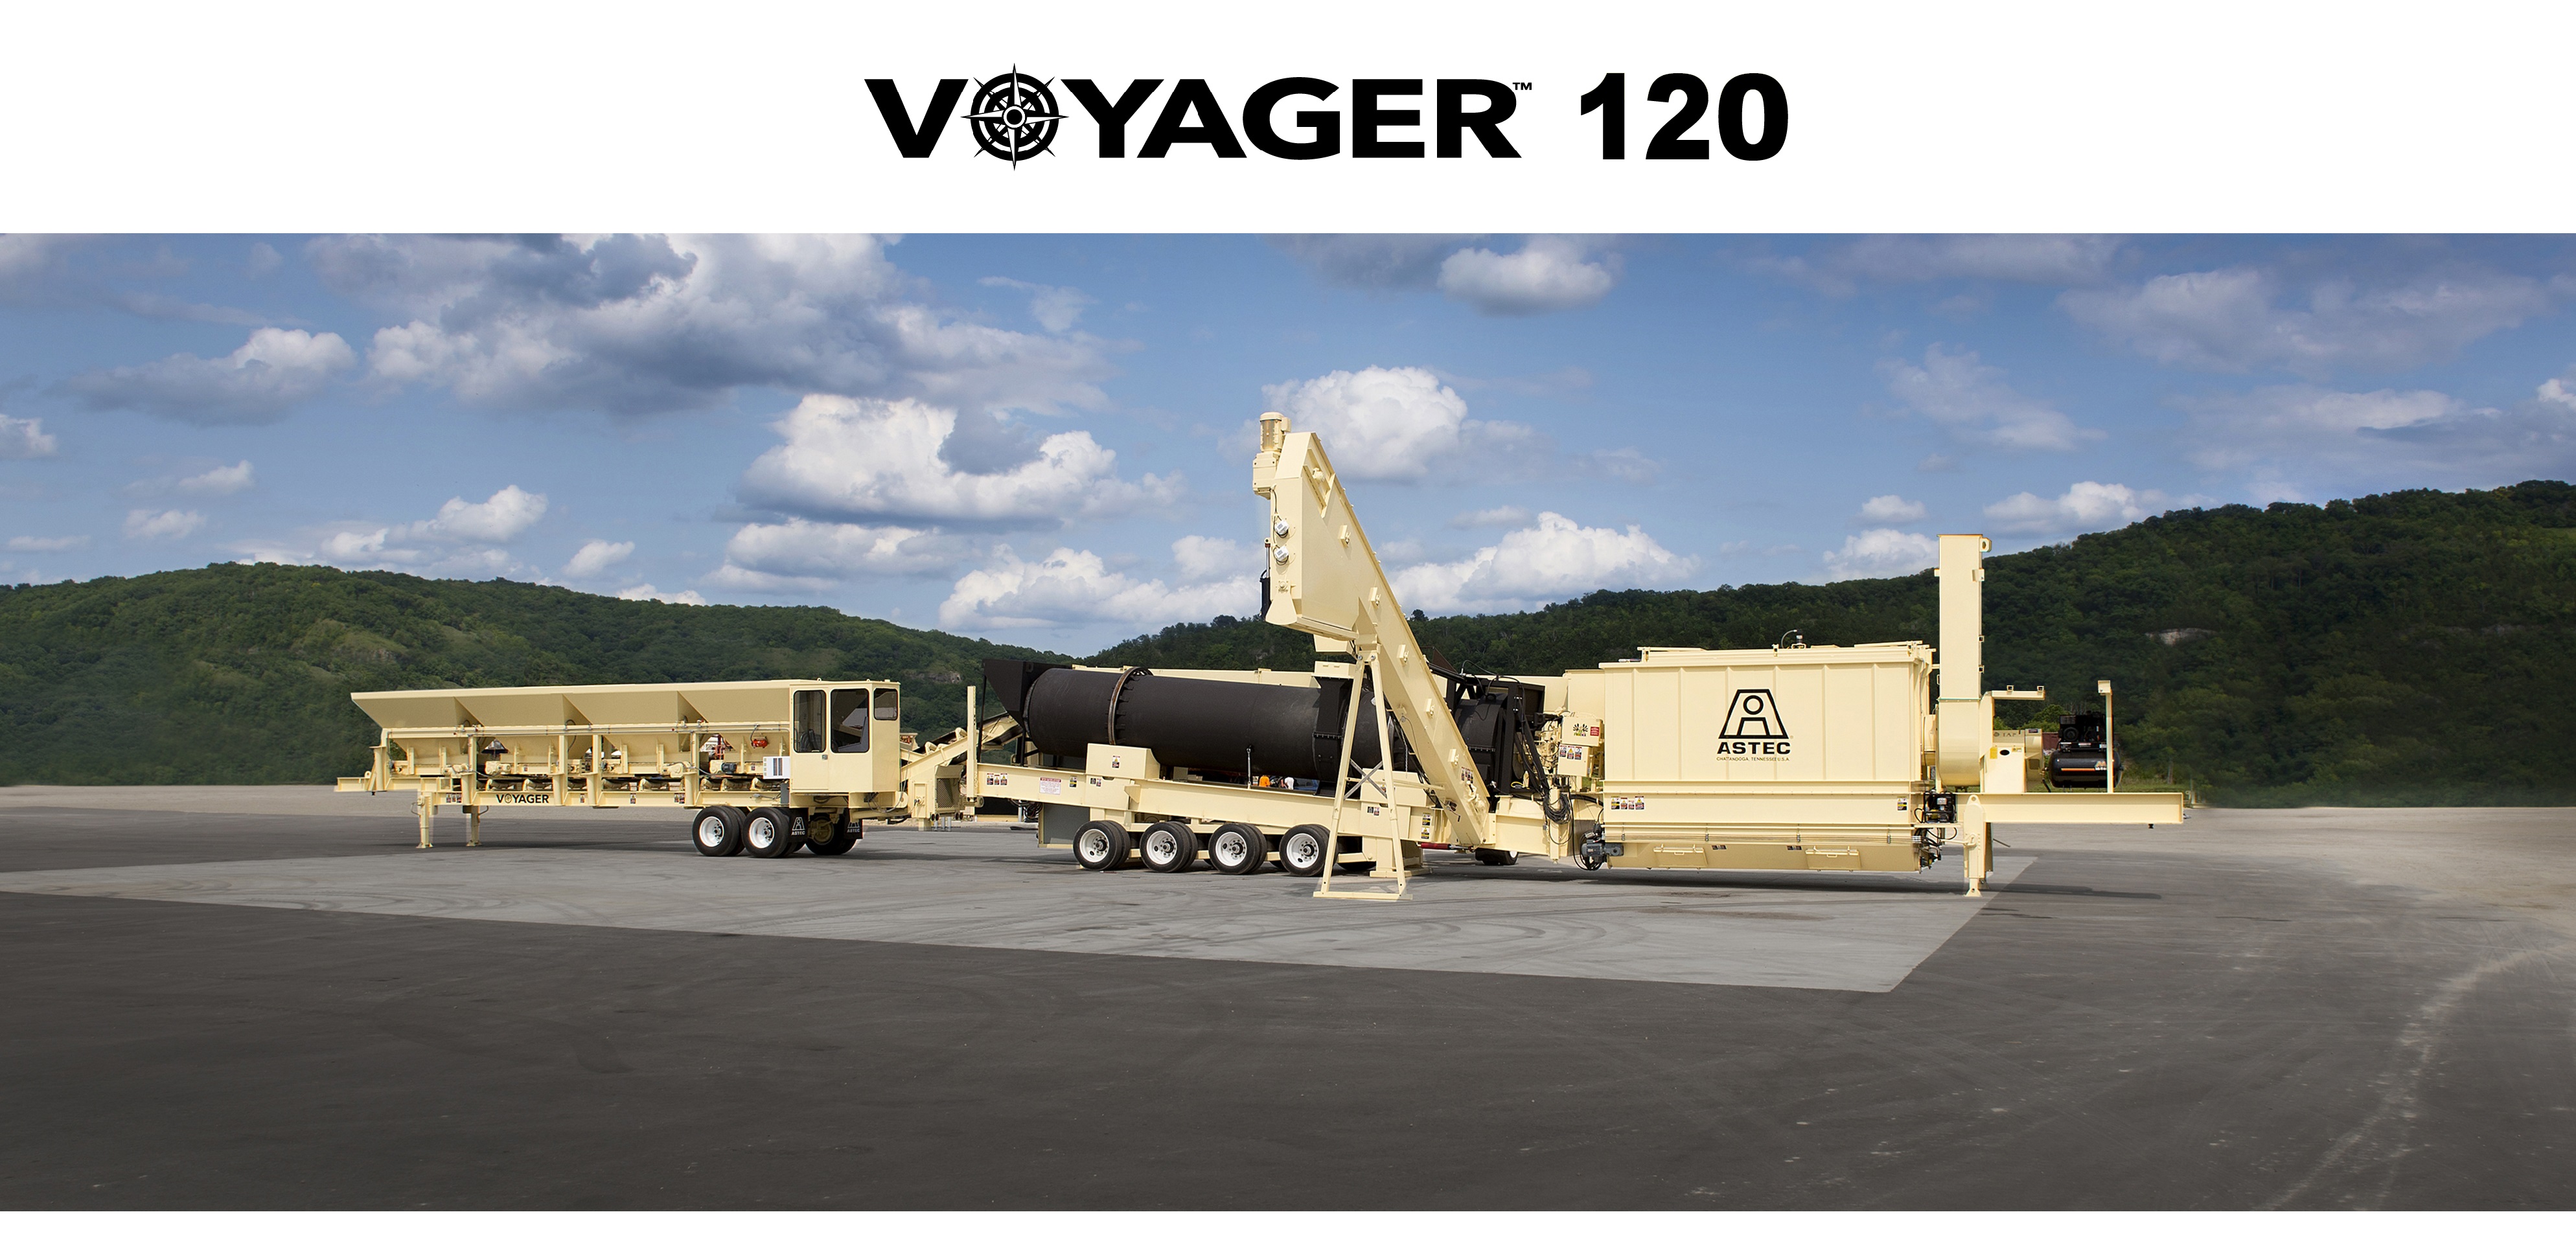 Voyager 120 zc